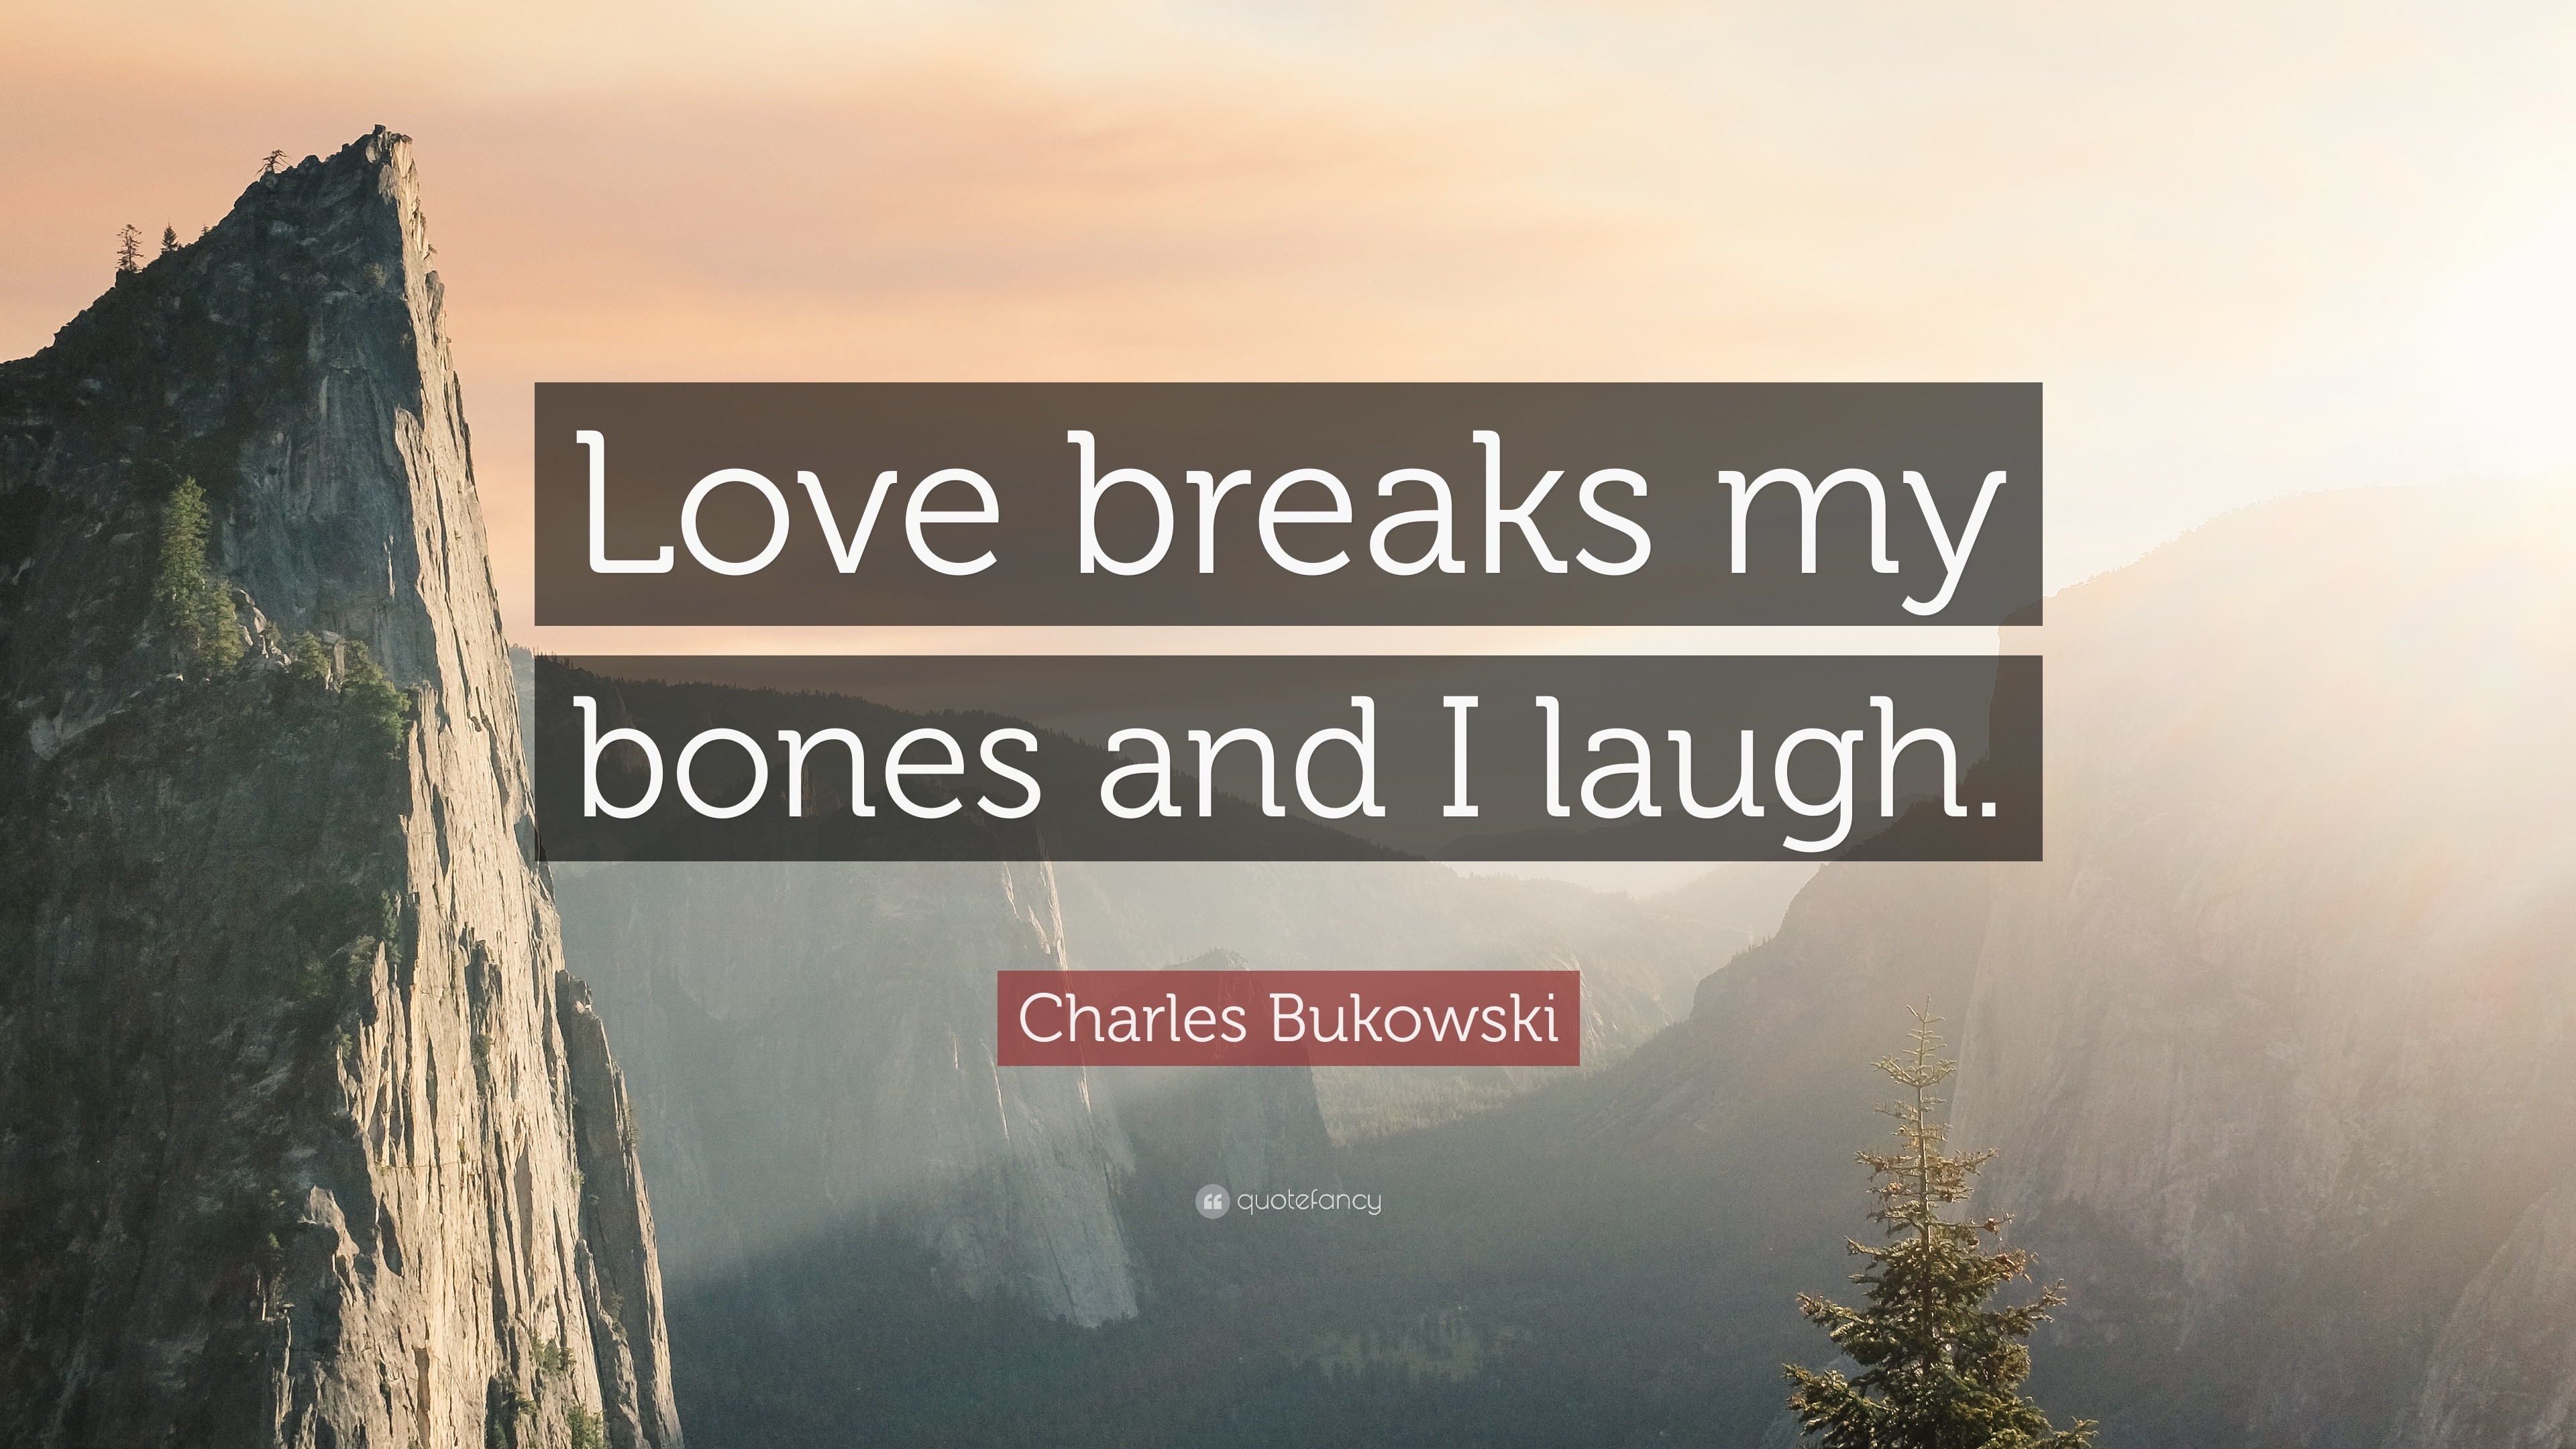 3840x2160 Charles Bukowski Quote: “Love breaks my bones and I laugh.”